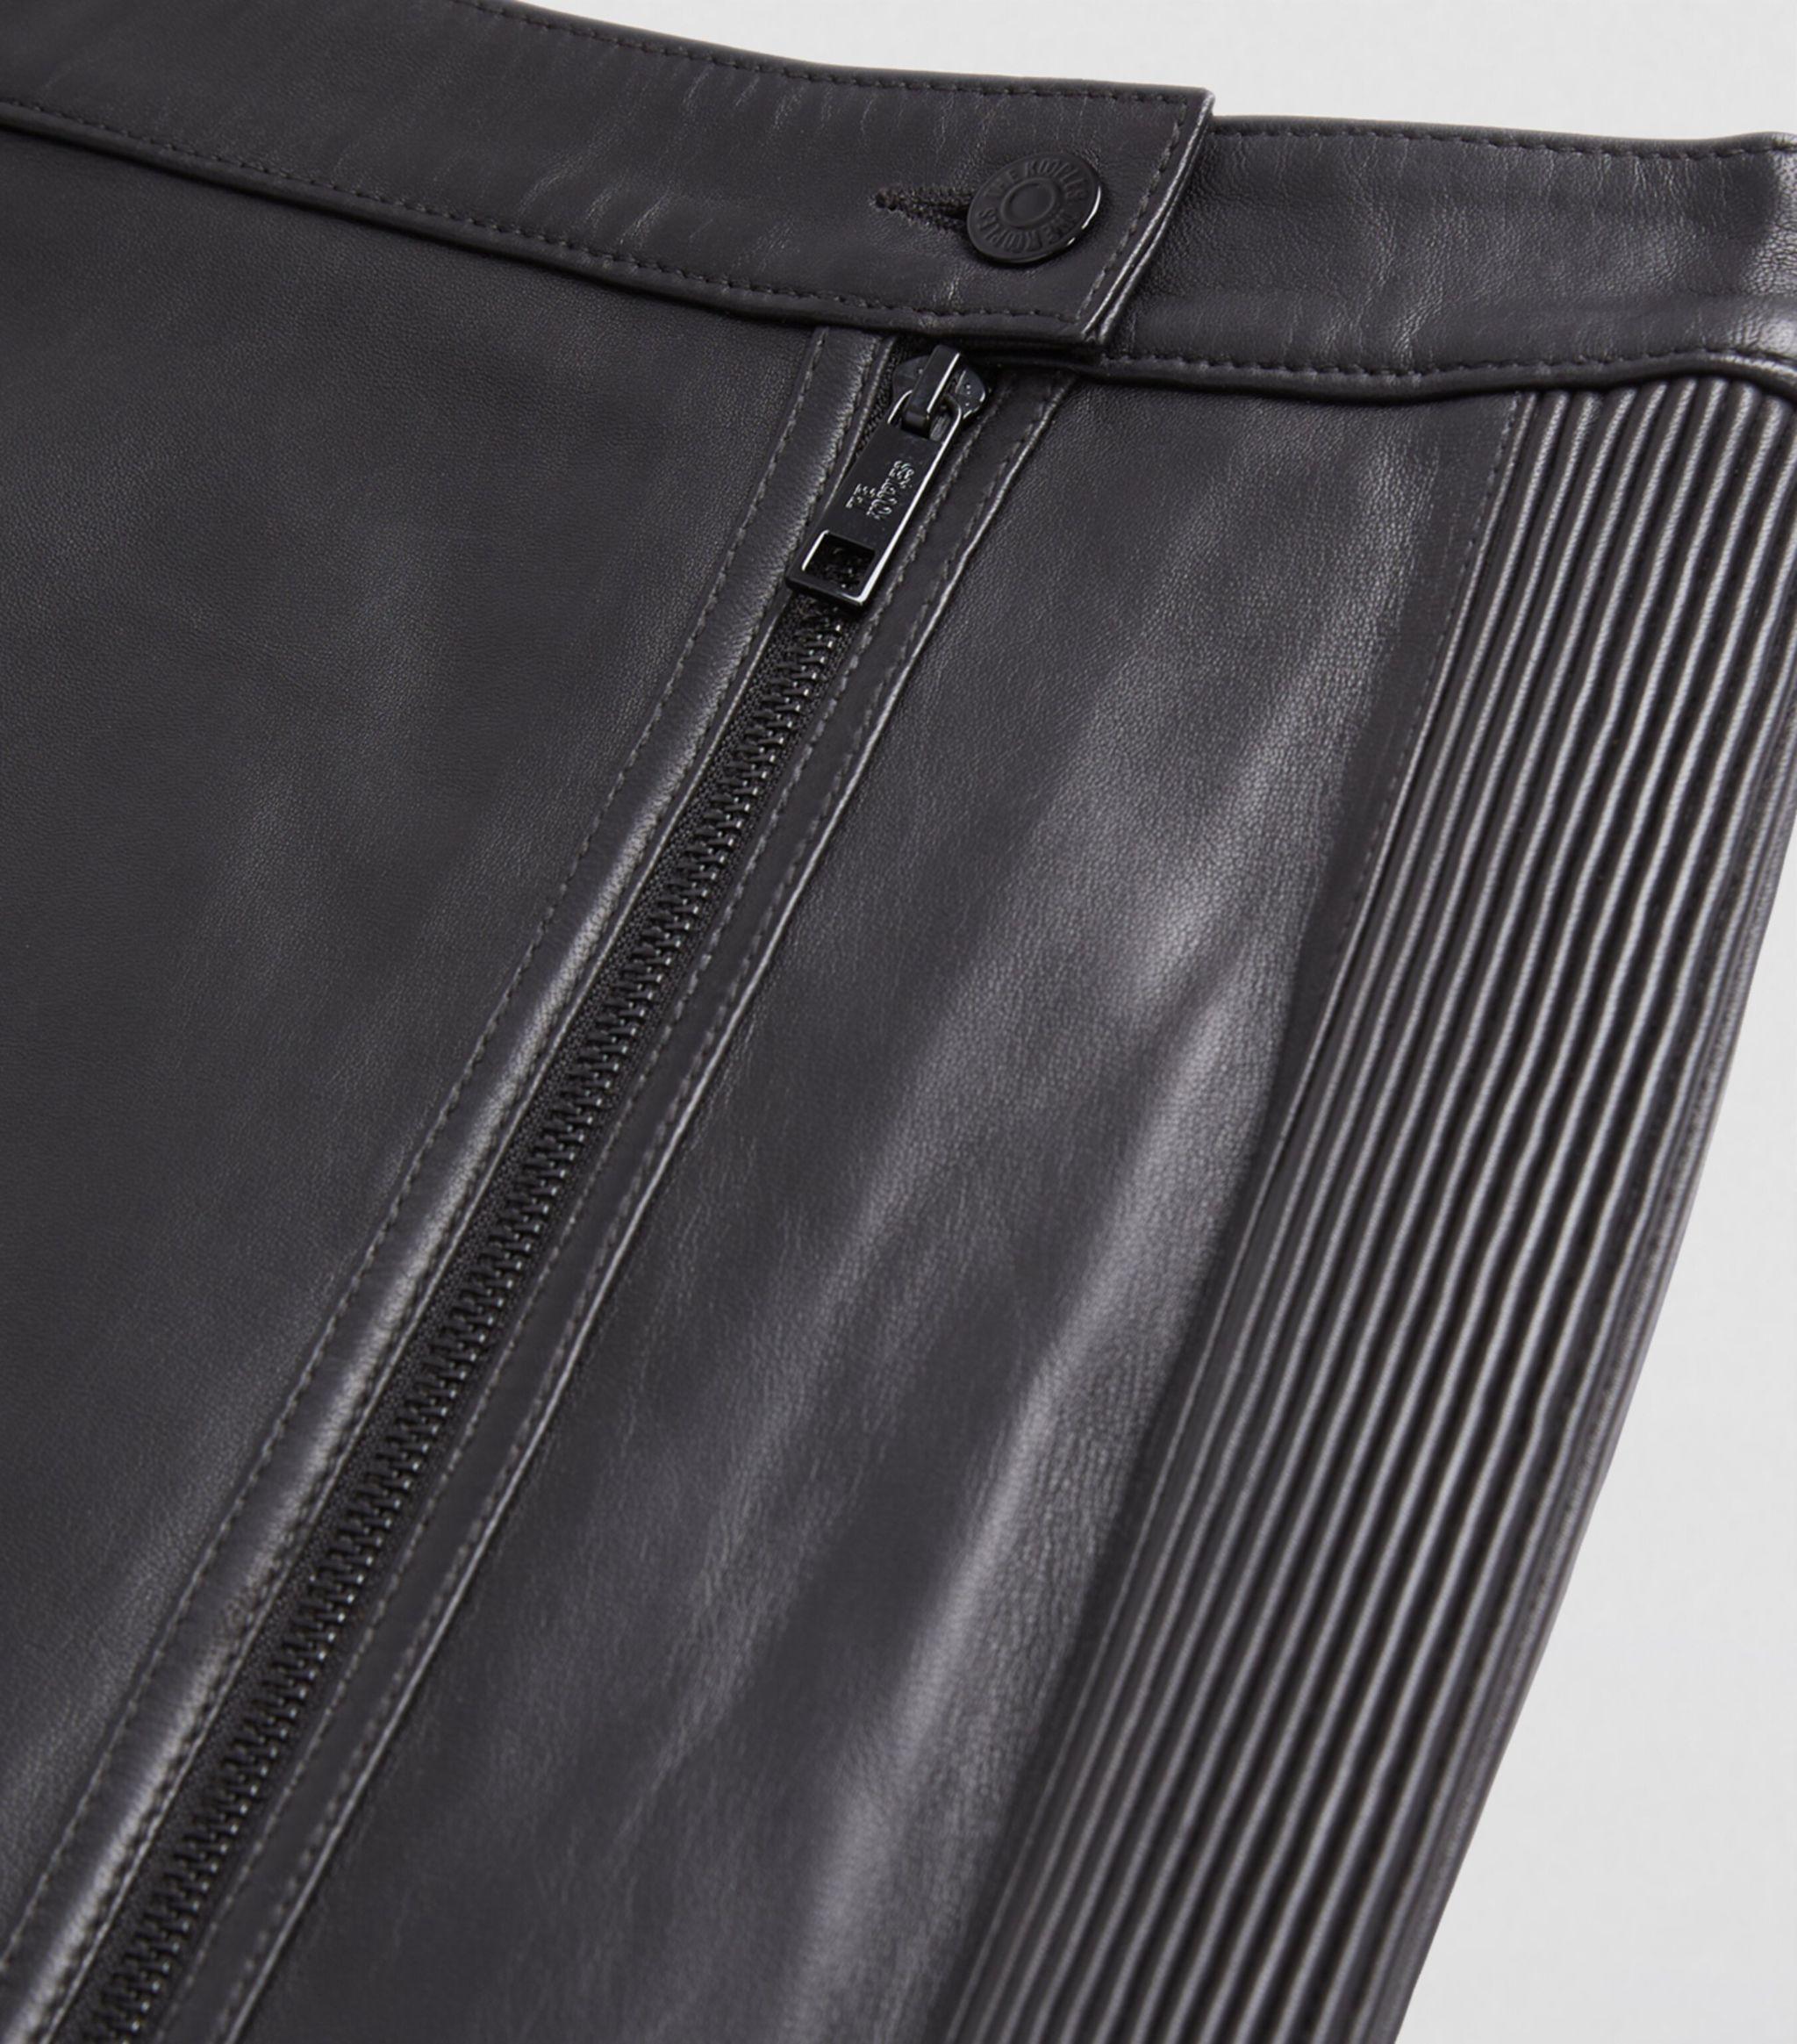 snakeskin-effect Leather Jacket - The Kooples